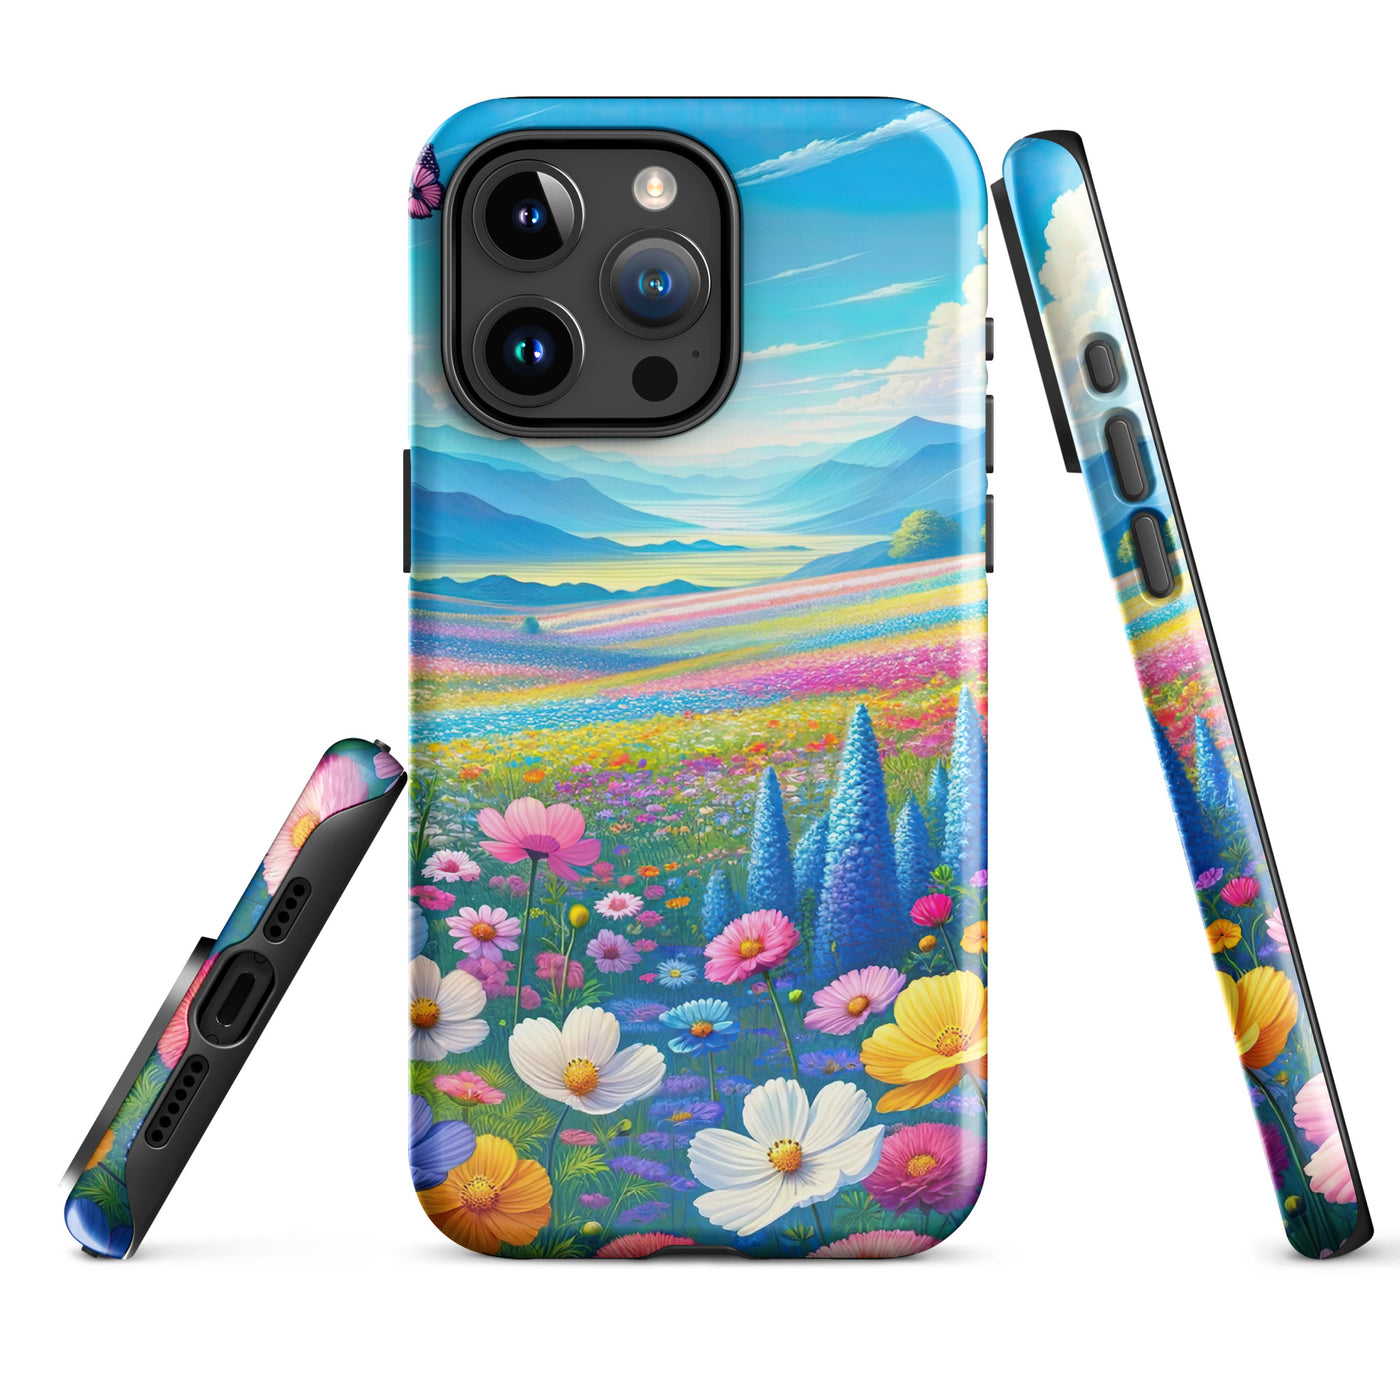 Weitläufiges Blumenfeld unter himmelblauem Himmel, leuchtende Flora - iPhone Schutzhülle (robust) camping xxx yyy zzz iPhone 15 Pro Max